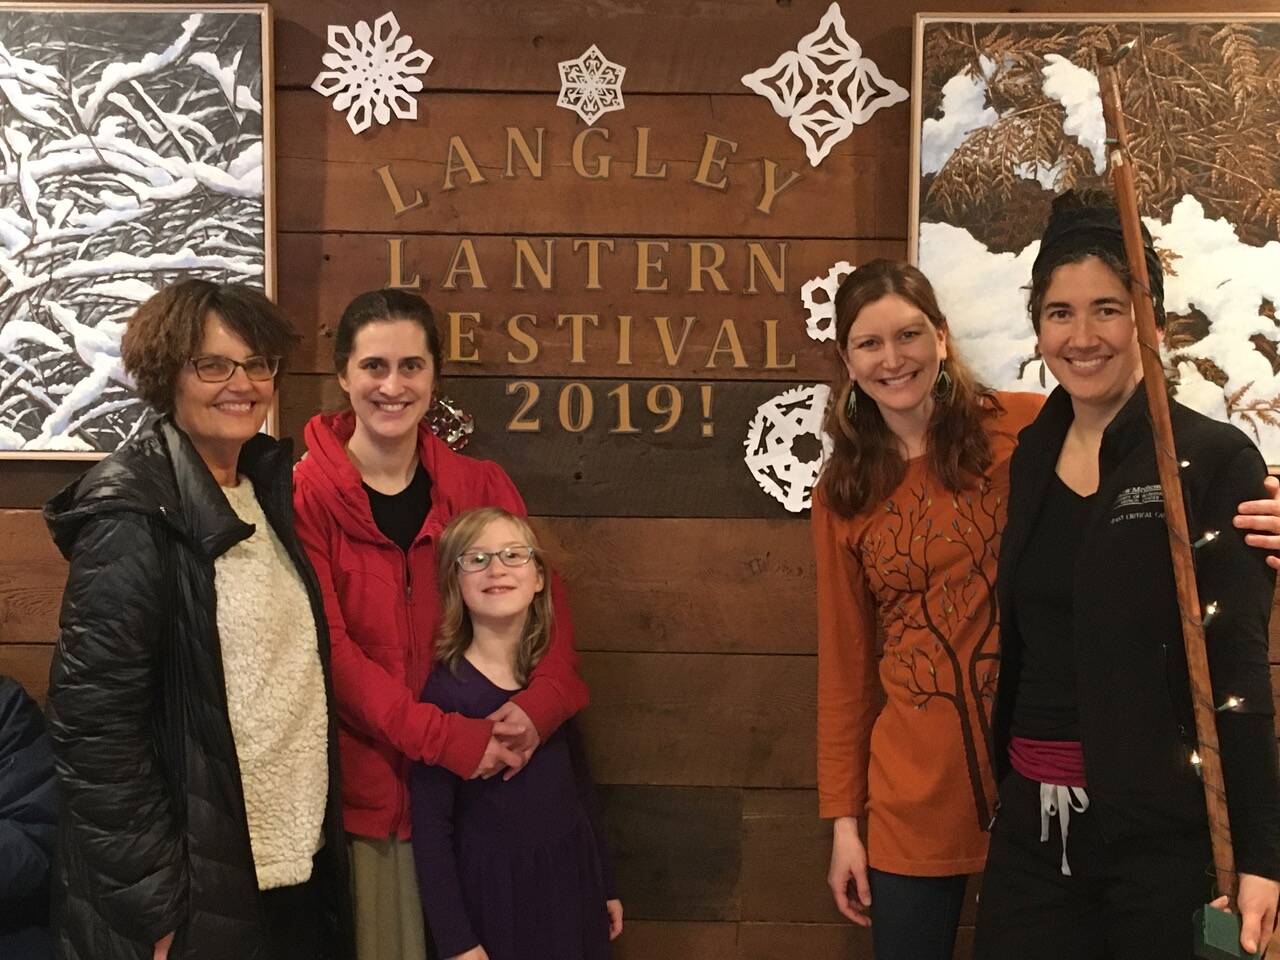 From left, Diana Lindsay, Vanessa and Greta Kohlhaas, Shannon Arndt and Katrina Bentsen at the 2019 lantern event. (Photo provided)